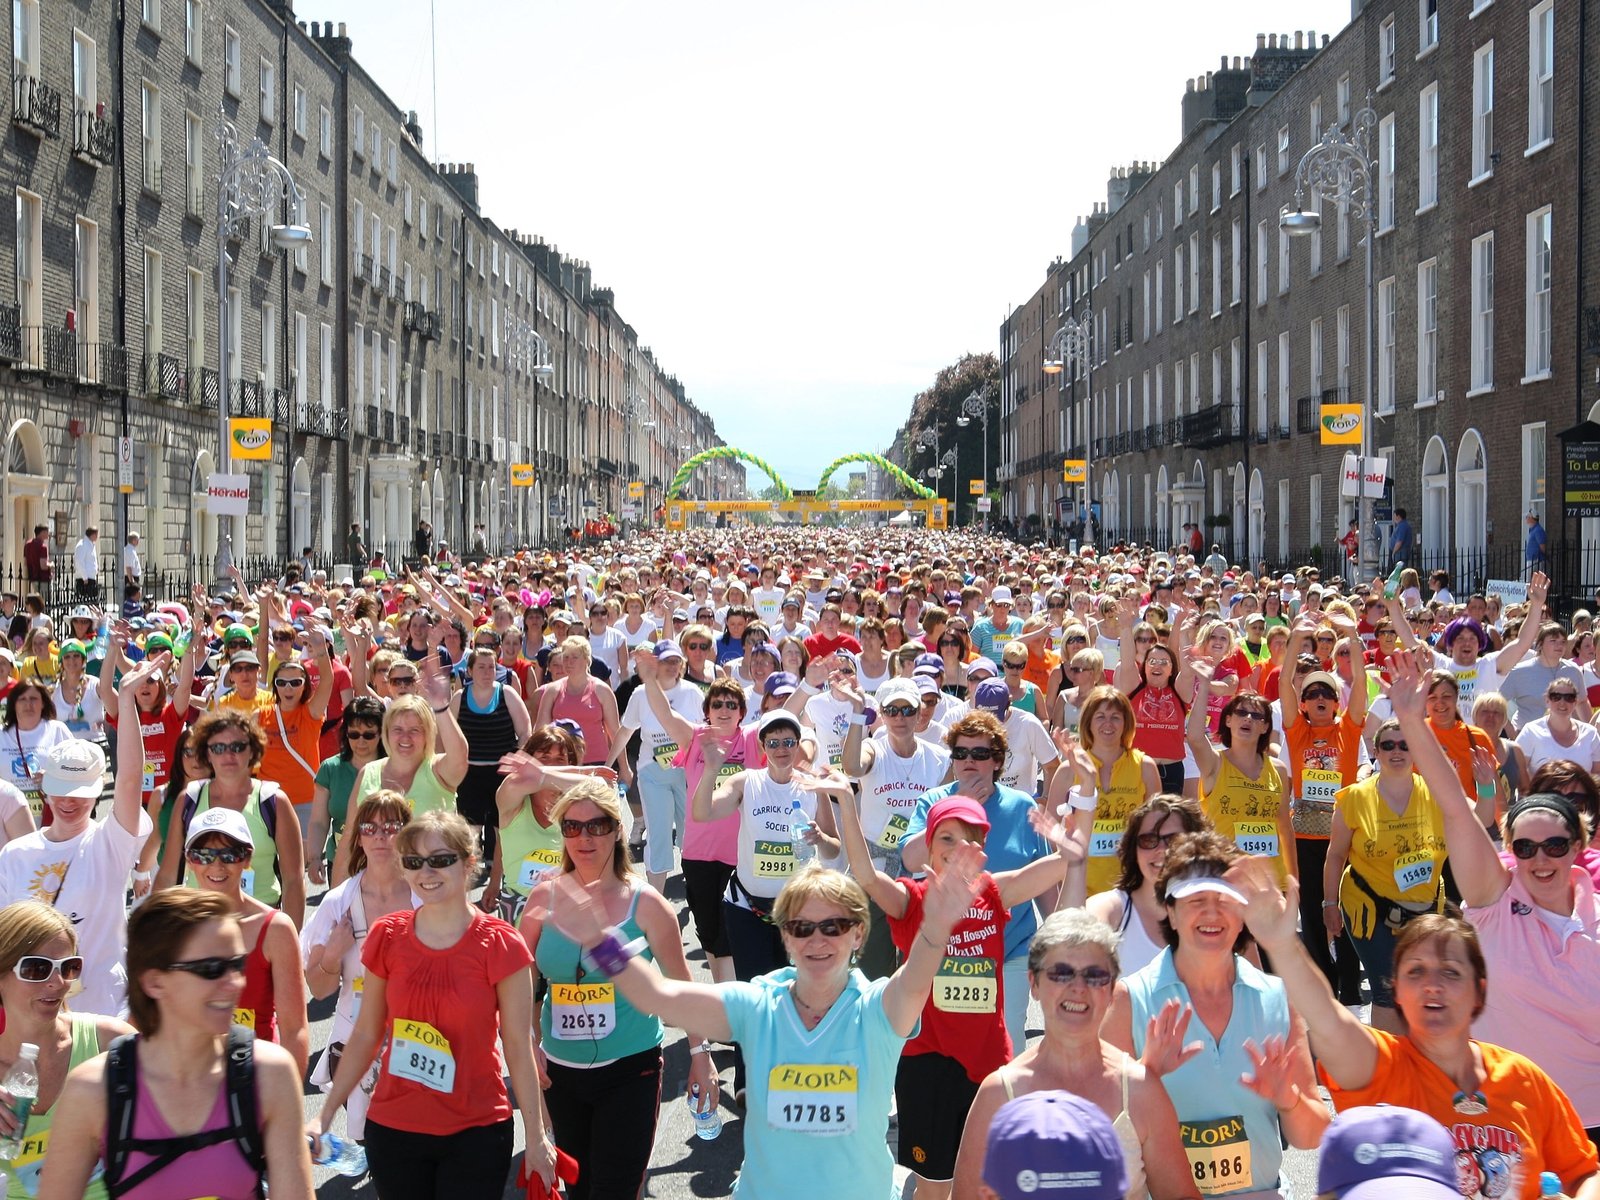 Over 40,000 run women's minimarathon